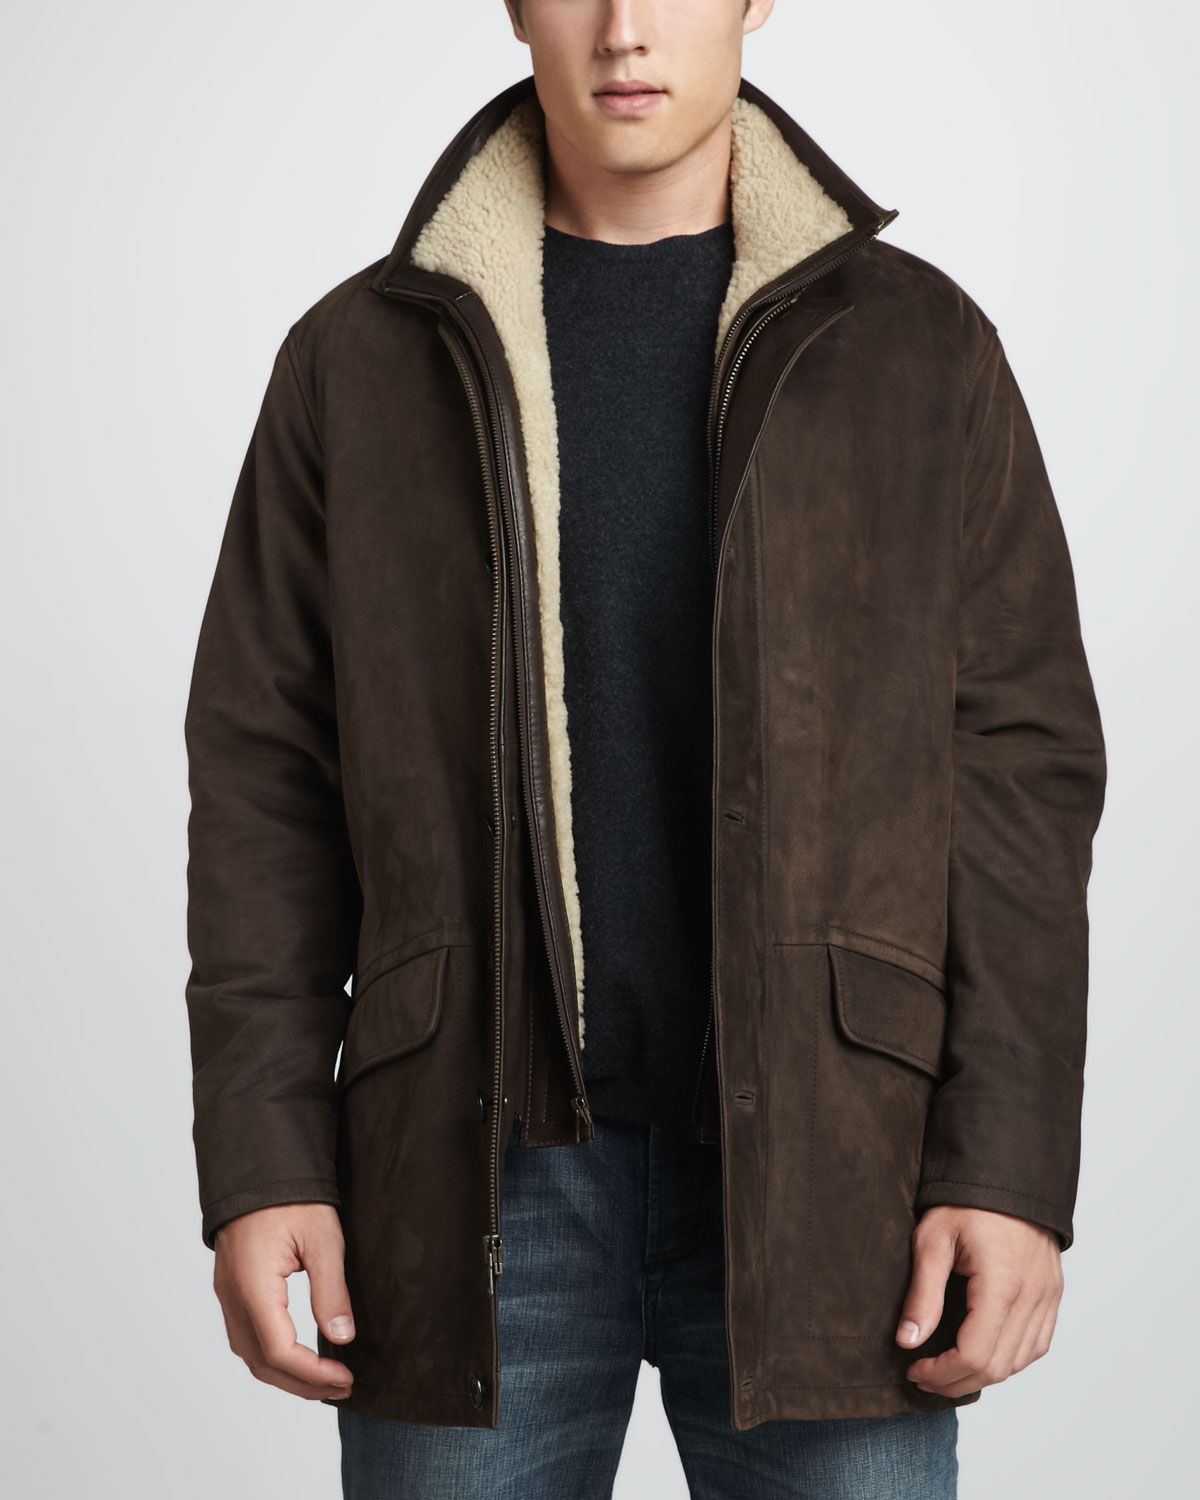 Lyst - Peter Millar Shearling Jacket in Brown for Men